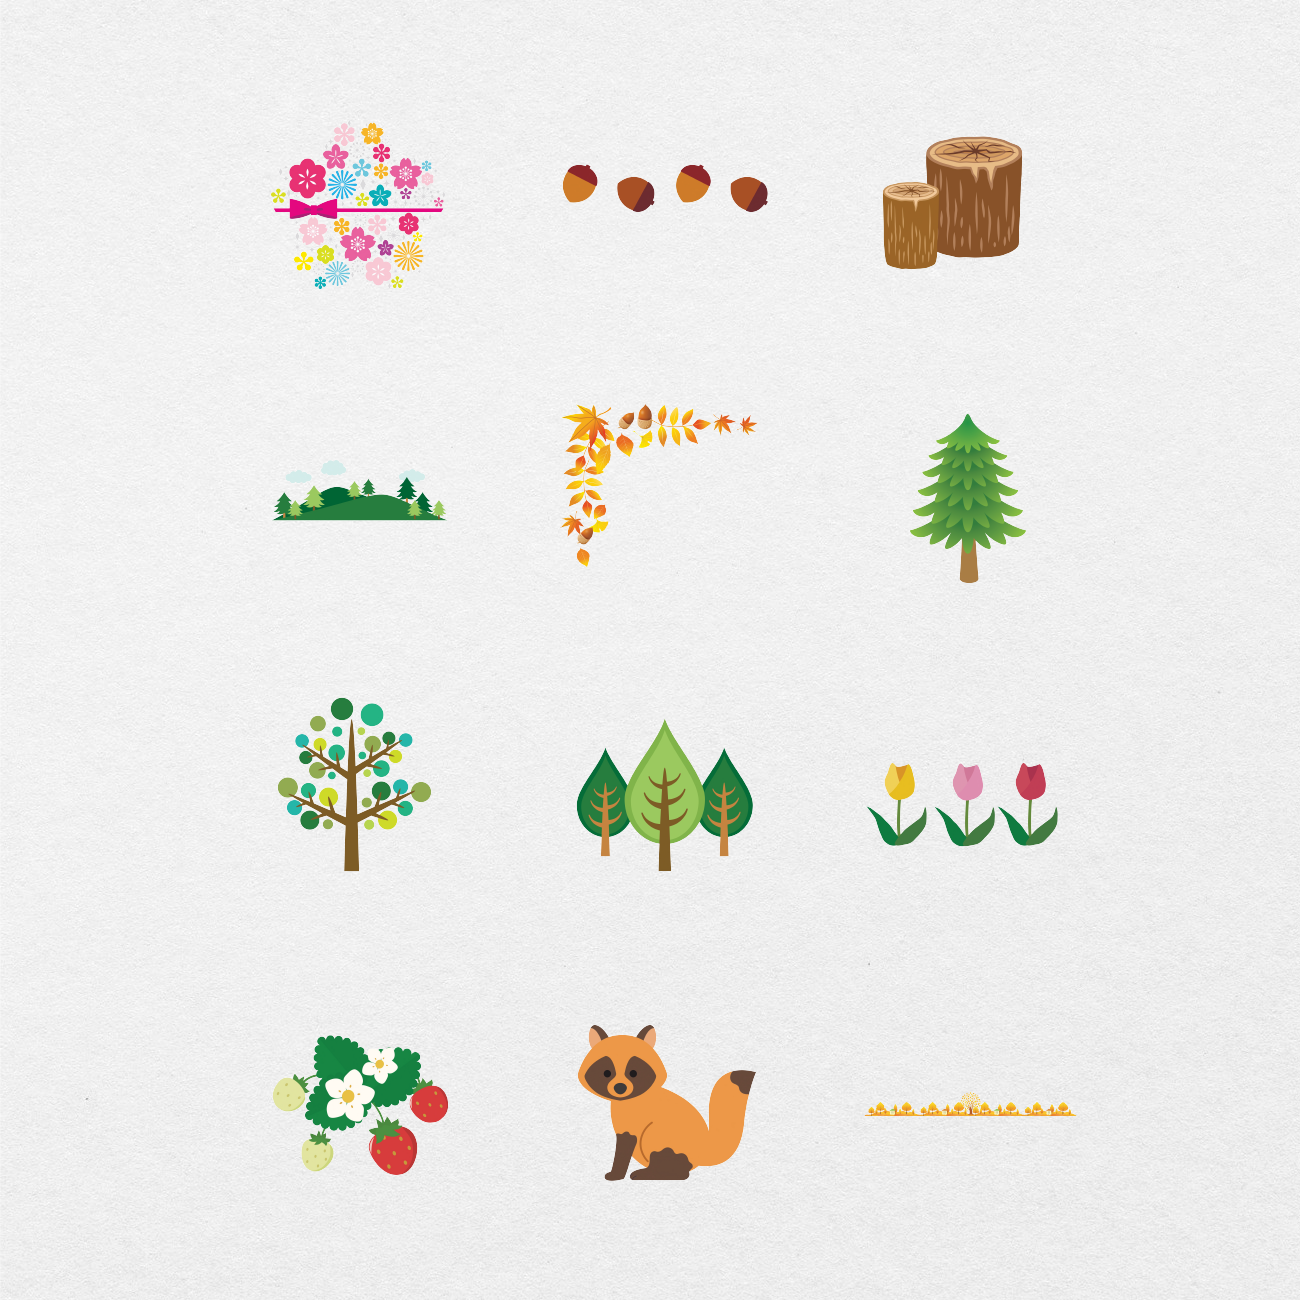 72 Digital Forest Elements Sticker Bundle - Stationery Pal